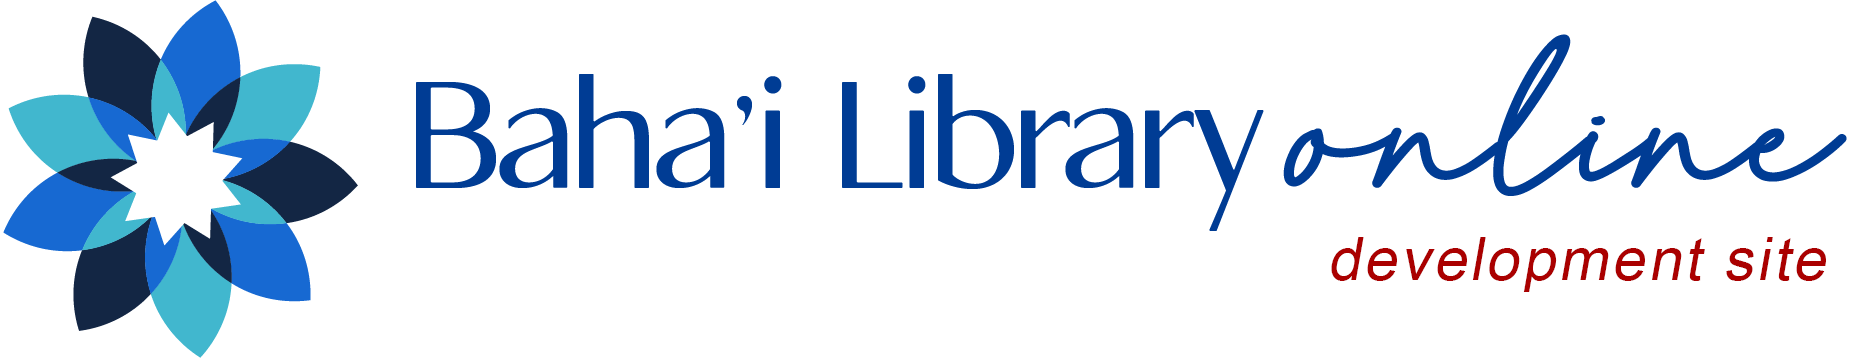 Baha'i Library Online